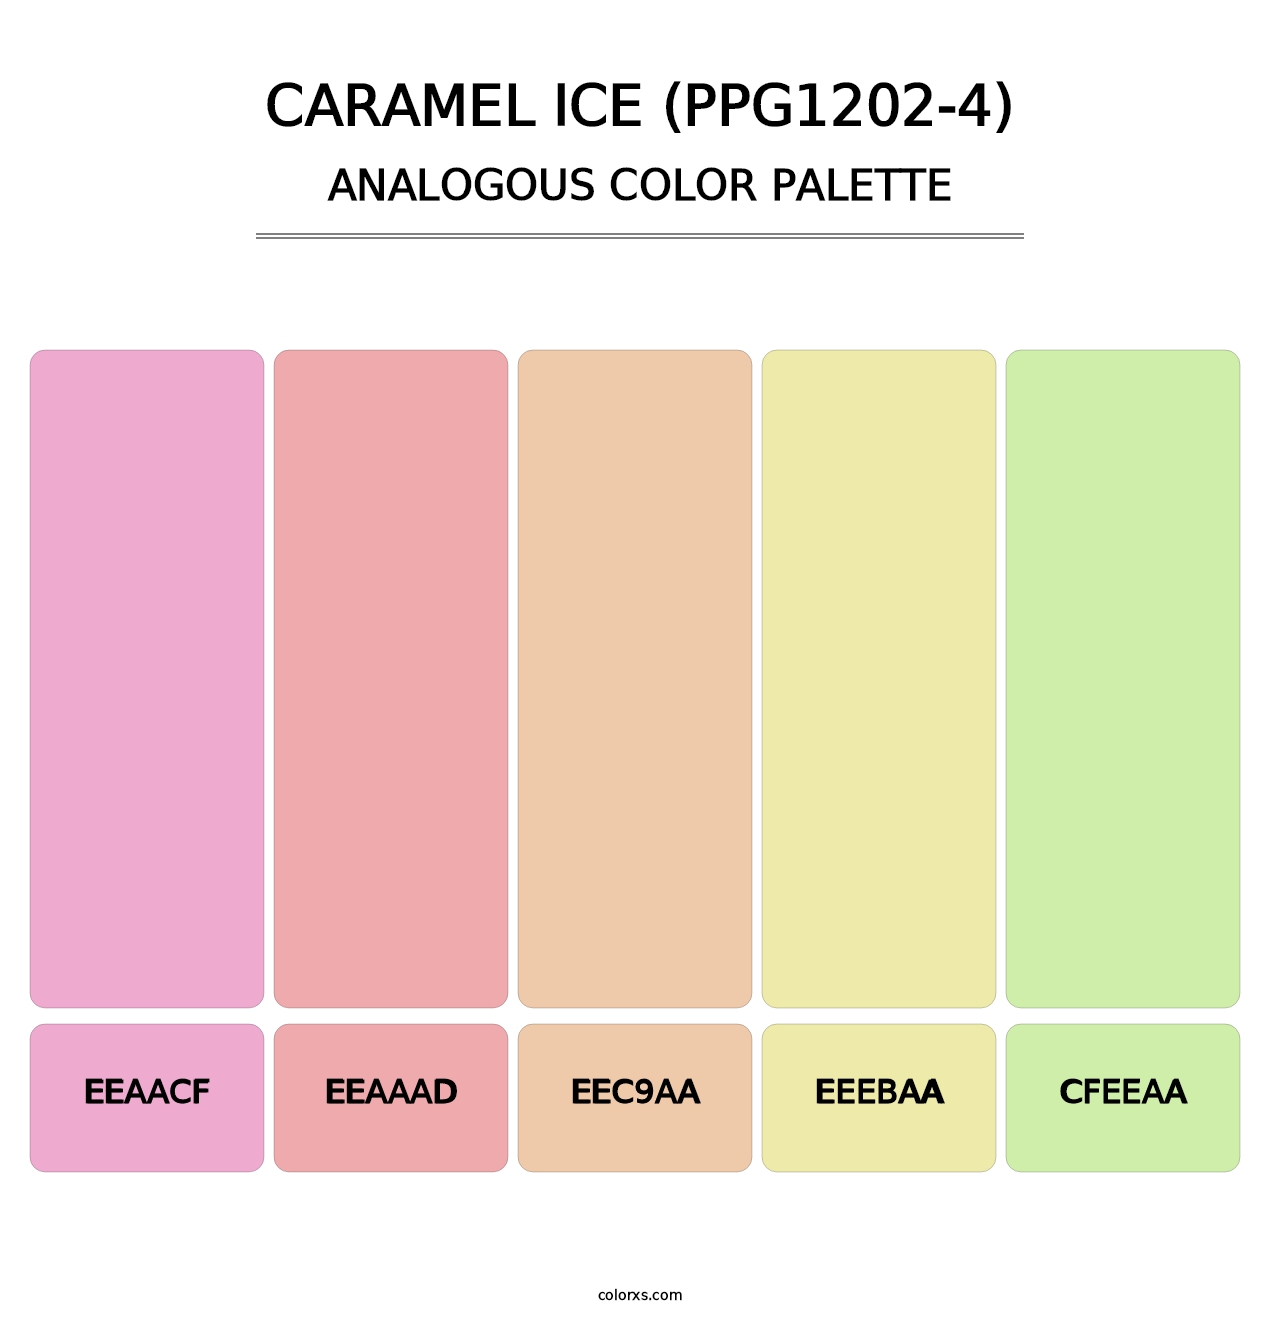 Caramel Ice (PPG1202-4) - Analogous Color Palette